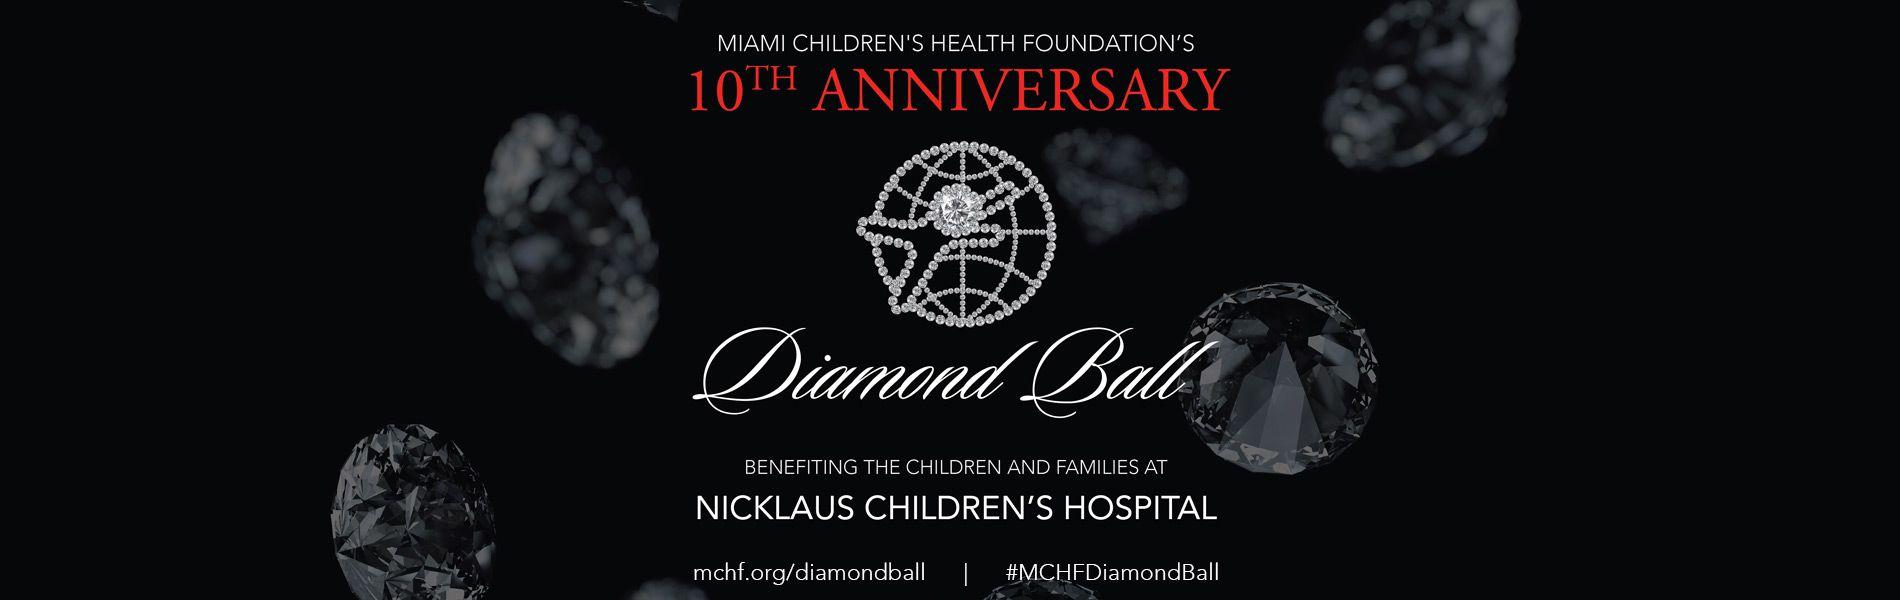 Diamond Ball Logo - Jose Feliciano Honored by Miami Children's Health Foundation at 10th